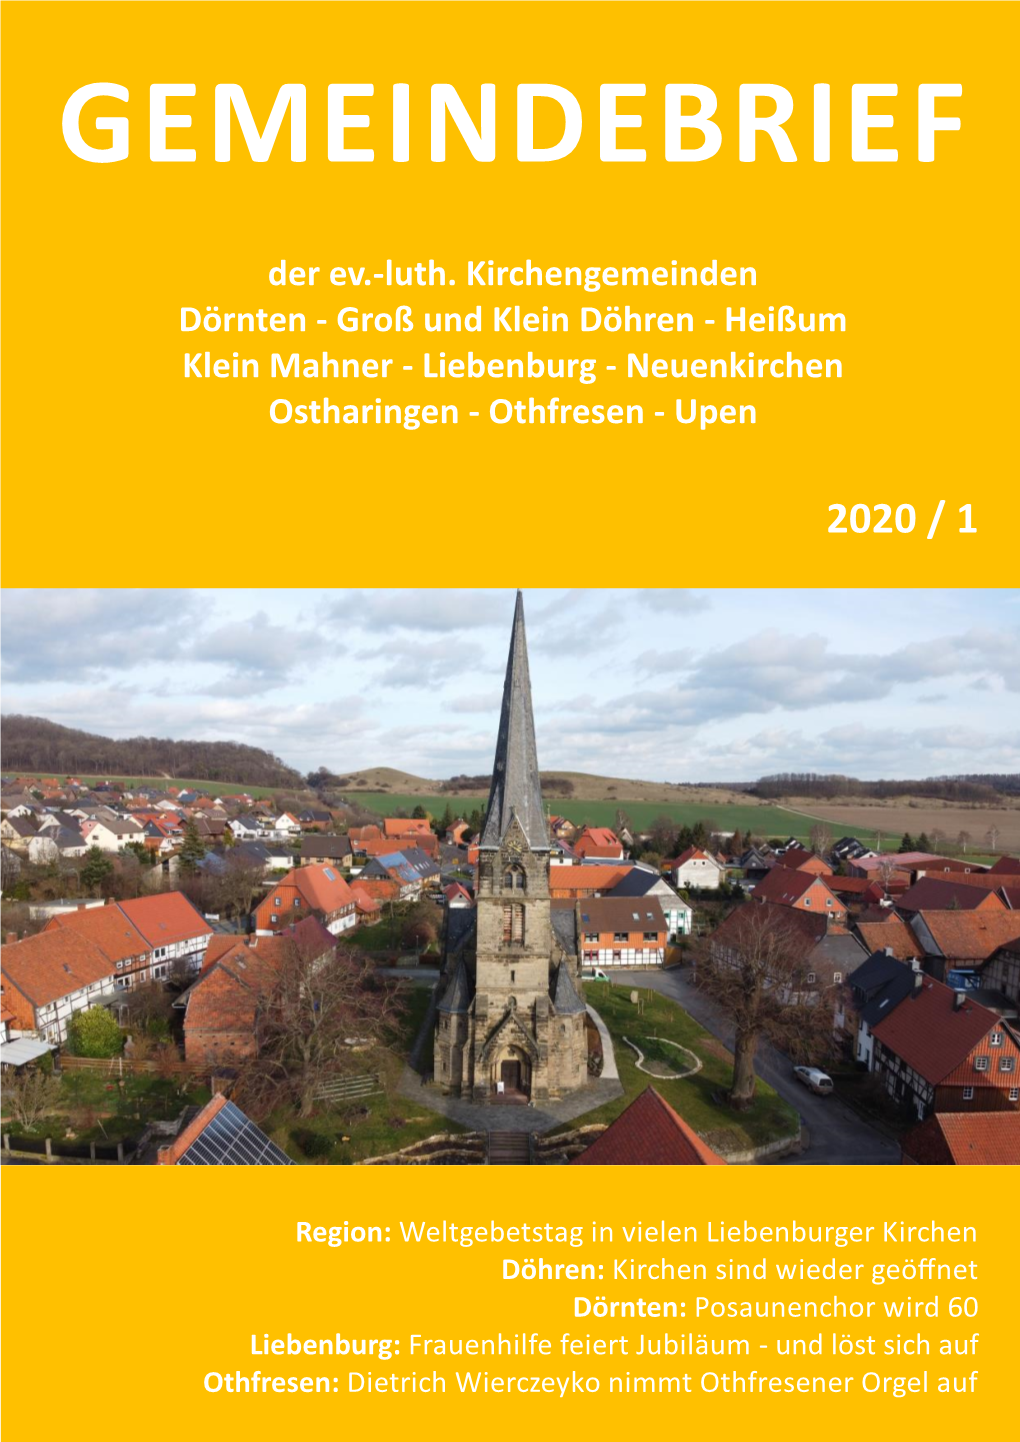 Neuenkirchen Ostharingen - Othfresen - Upen